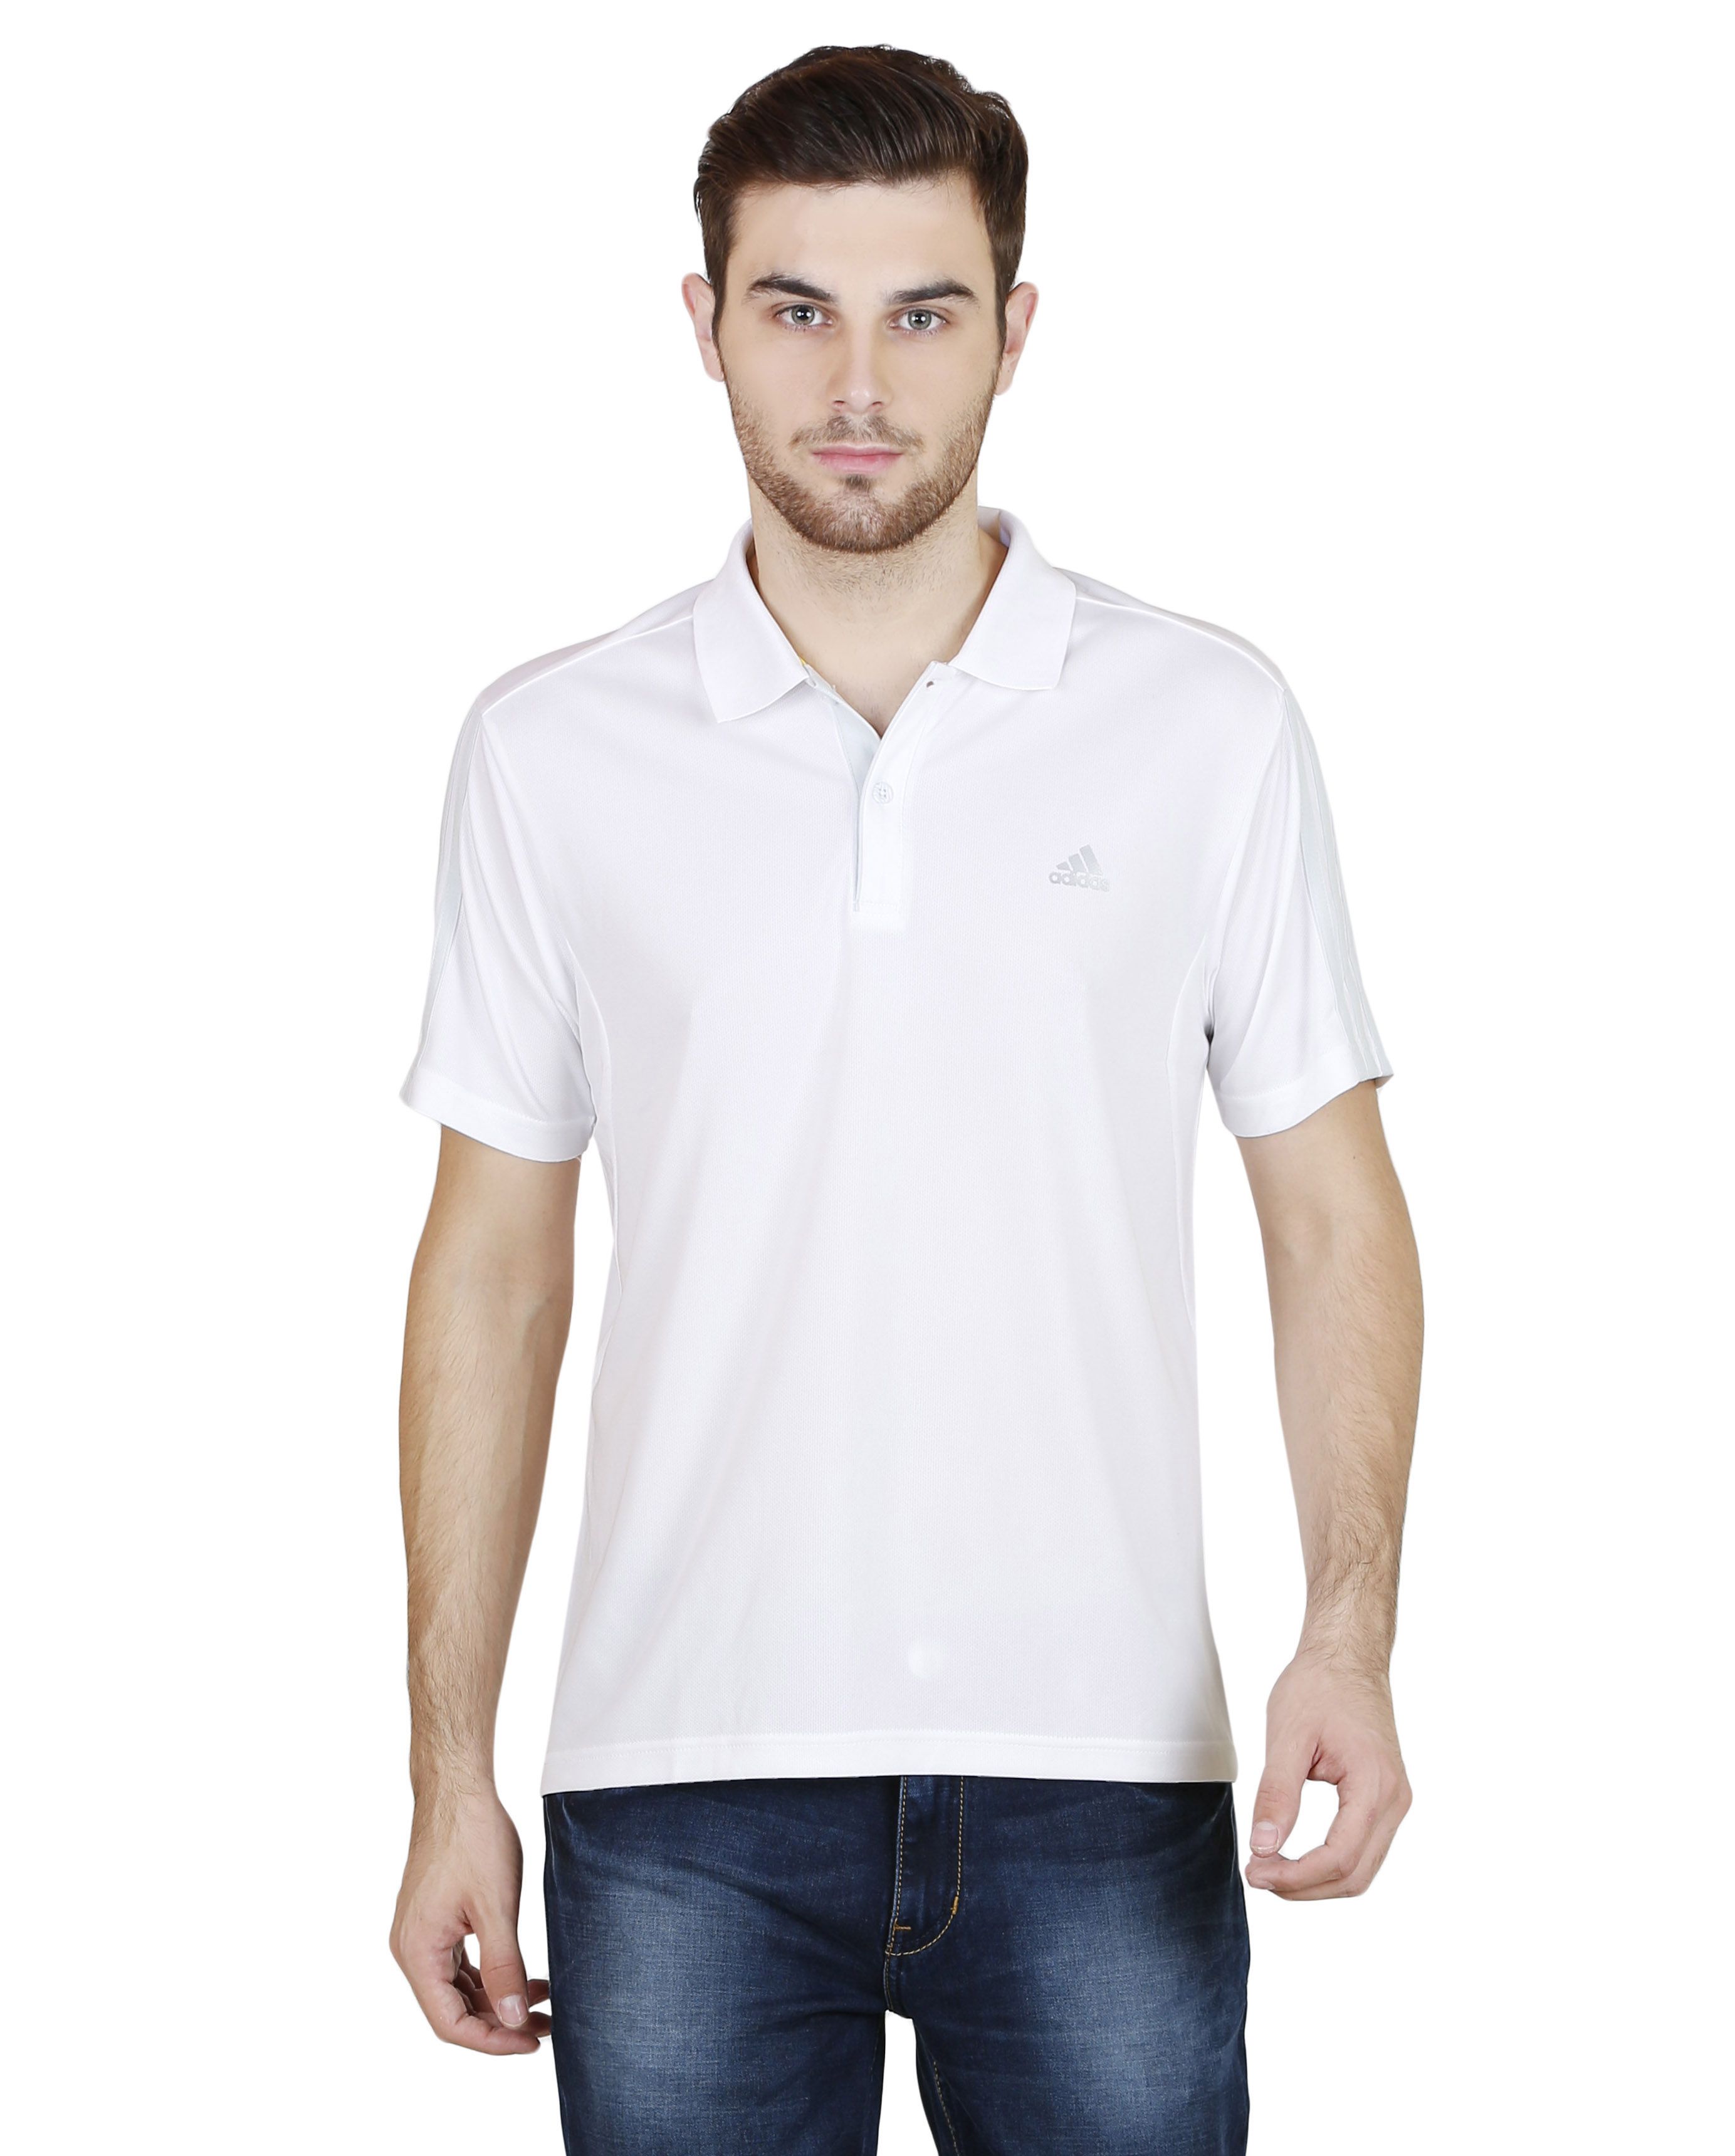 Adidas White Polo T Shirts - Buy Adidas White Polo T Shirts Online at